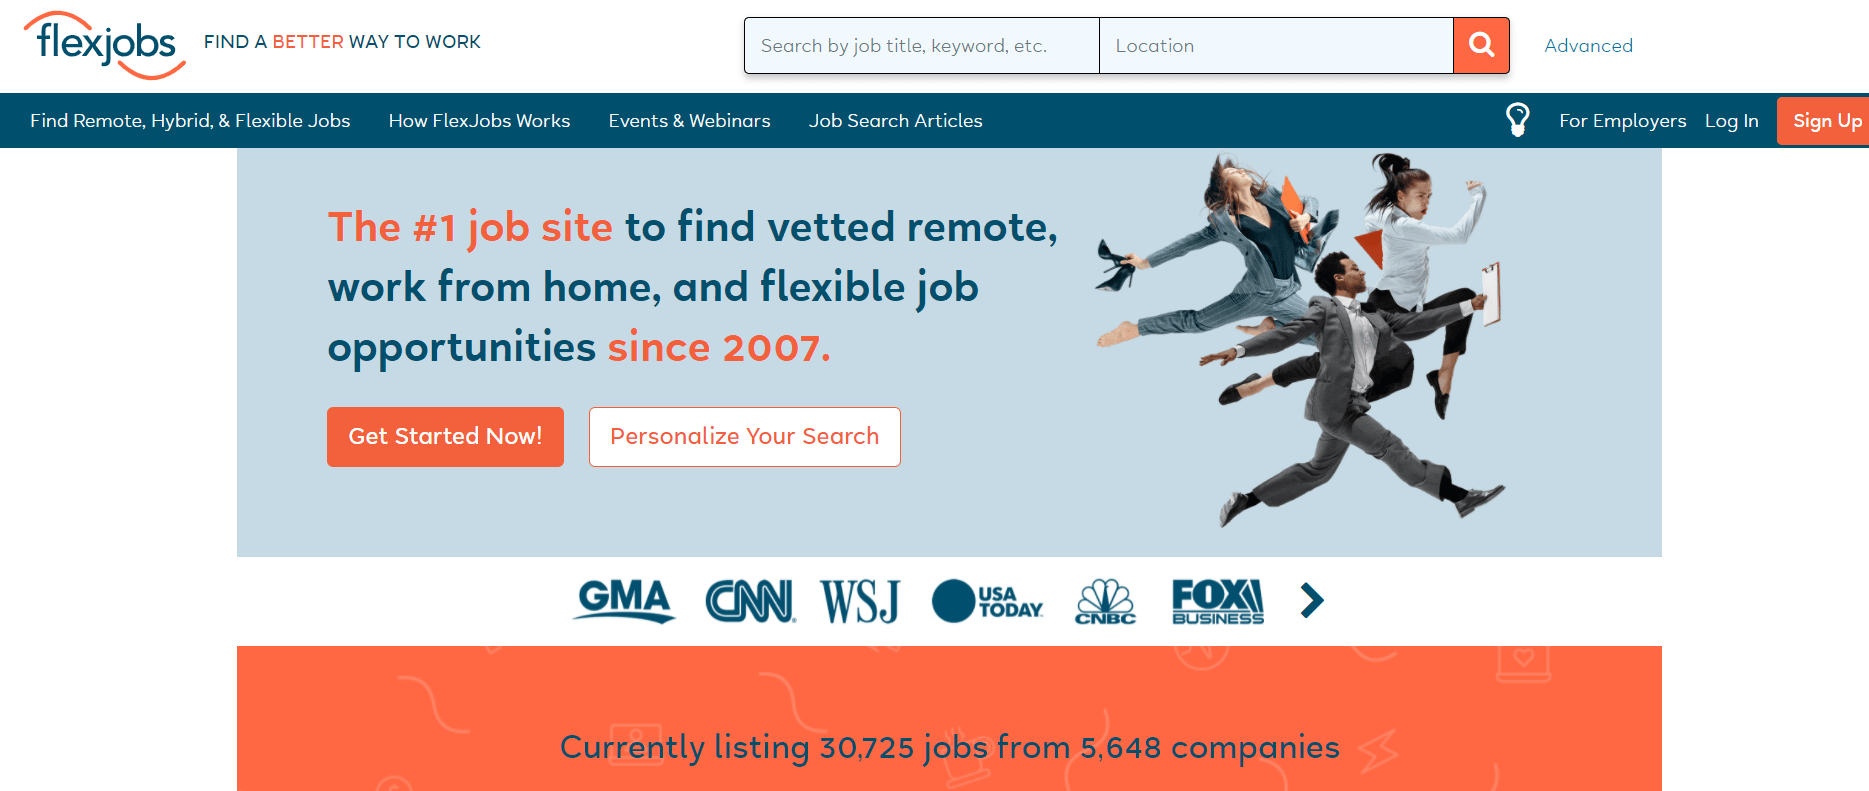 flexjobs freelance